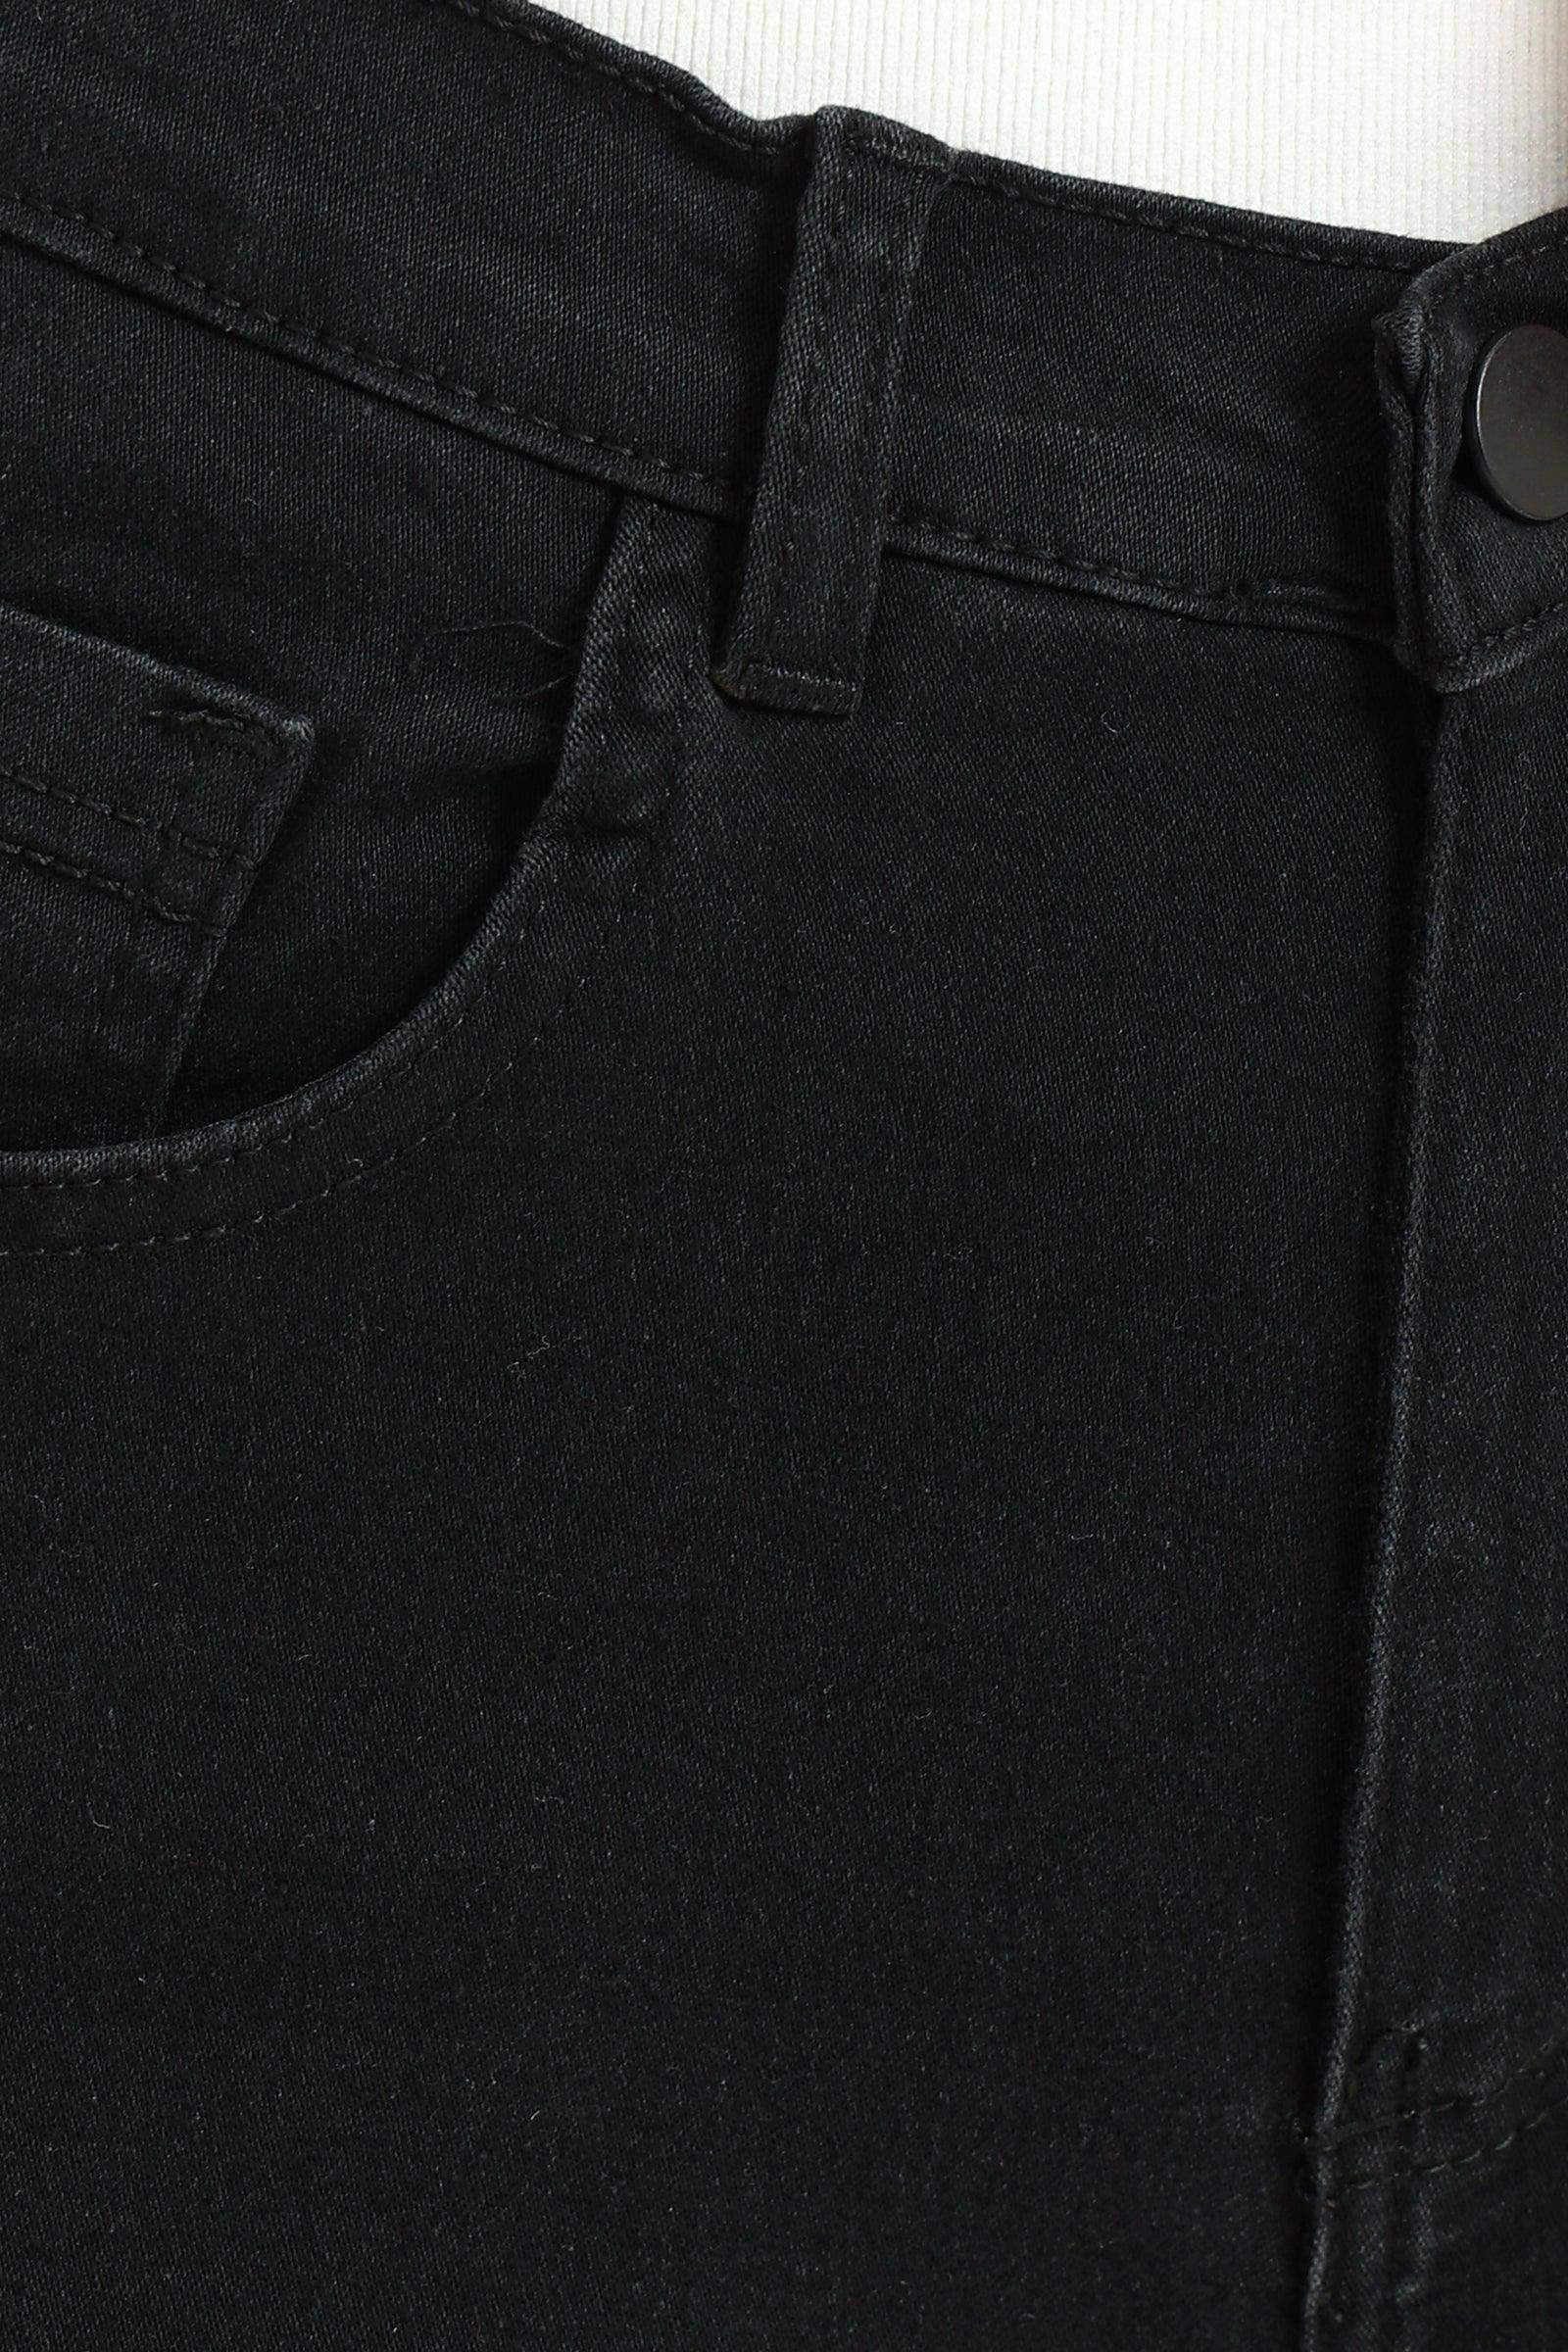 Cotton Flared Jeans - Carina - كارينا